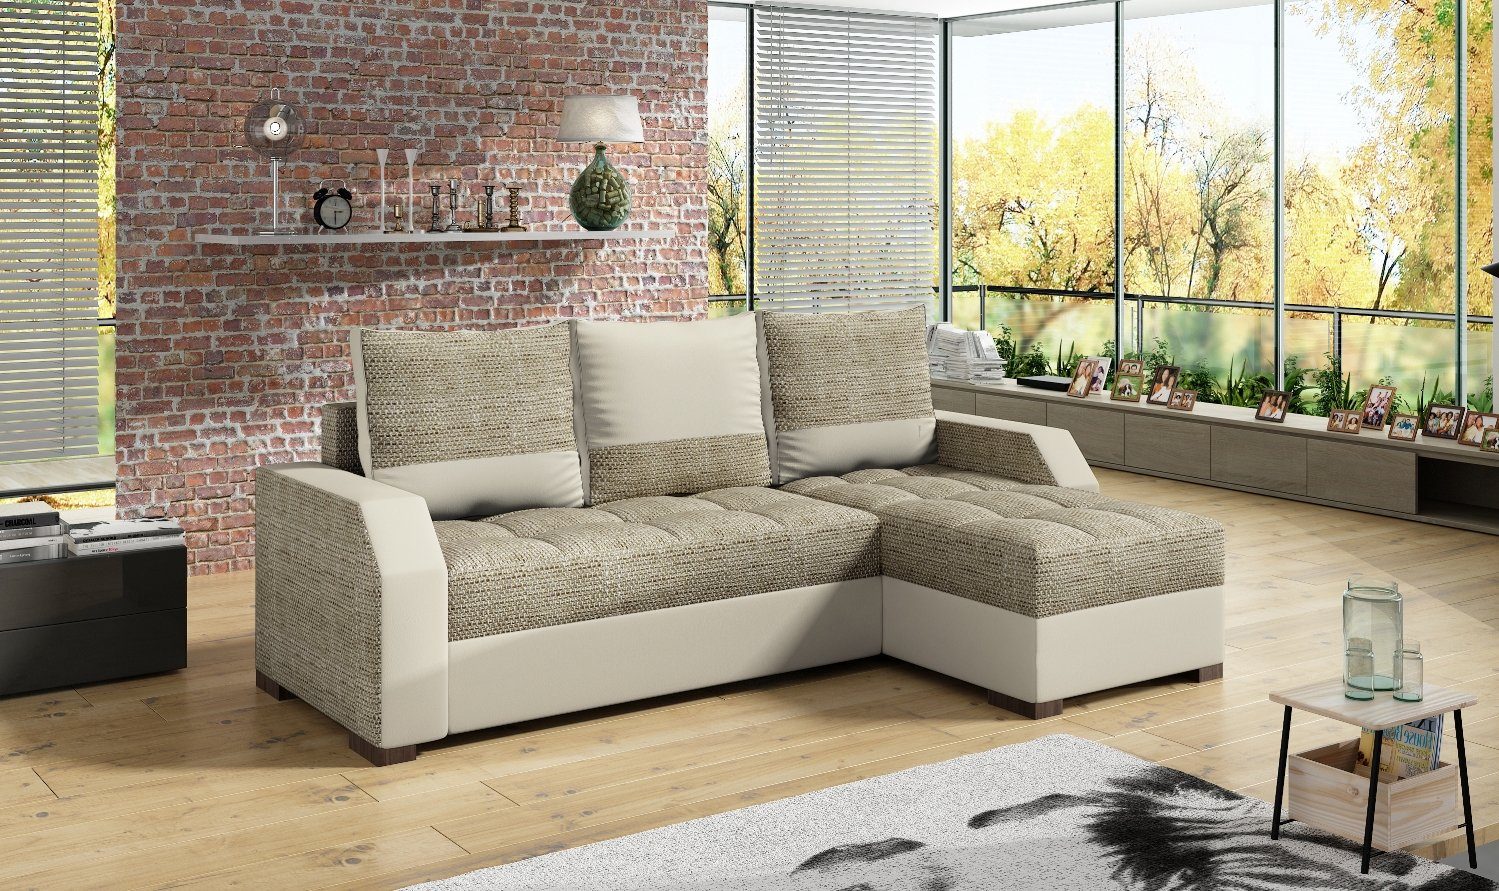 JVmoebel Ecksofa, Design Ecksofa Bettfunktion Couch Leder Textil Polster Sofas Couchen Beige